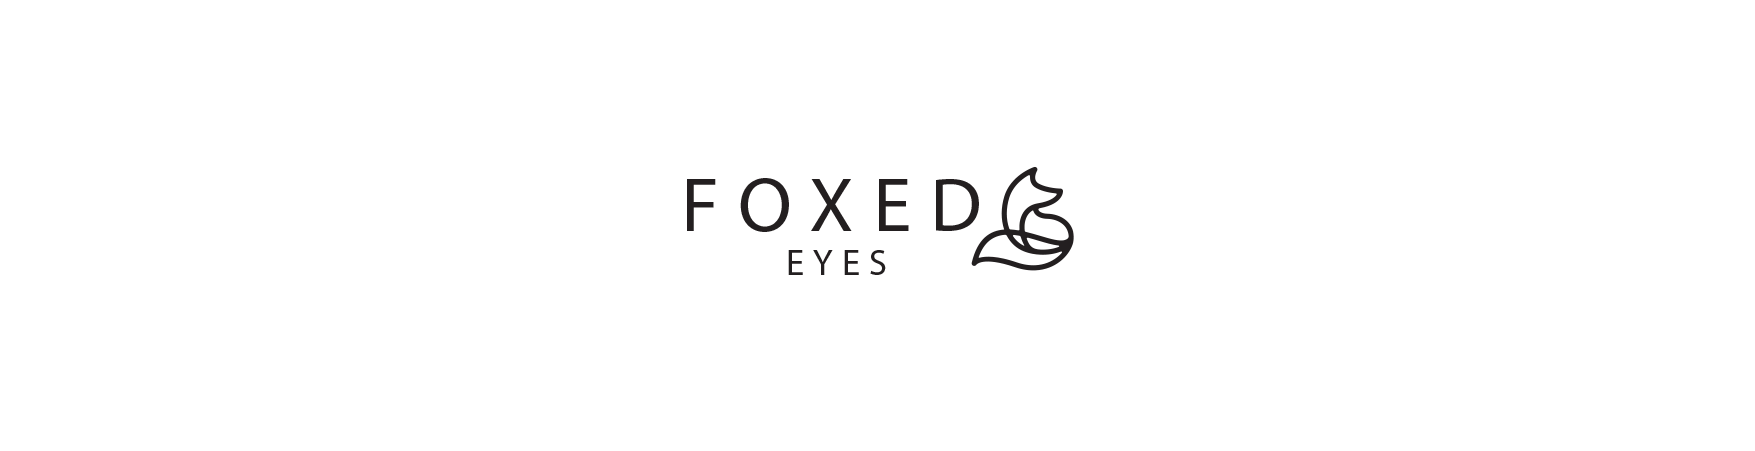 Foxed Eyes